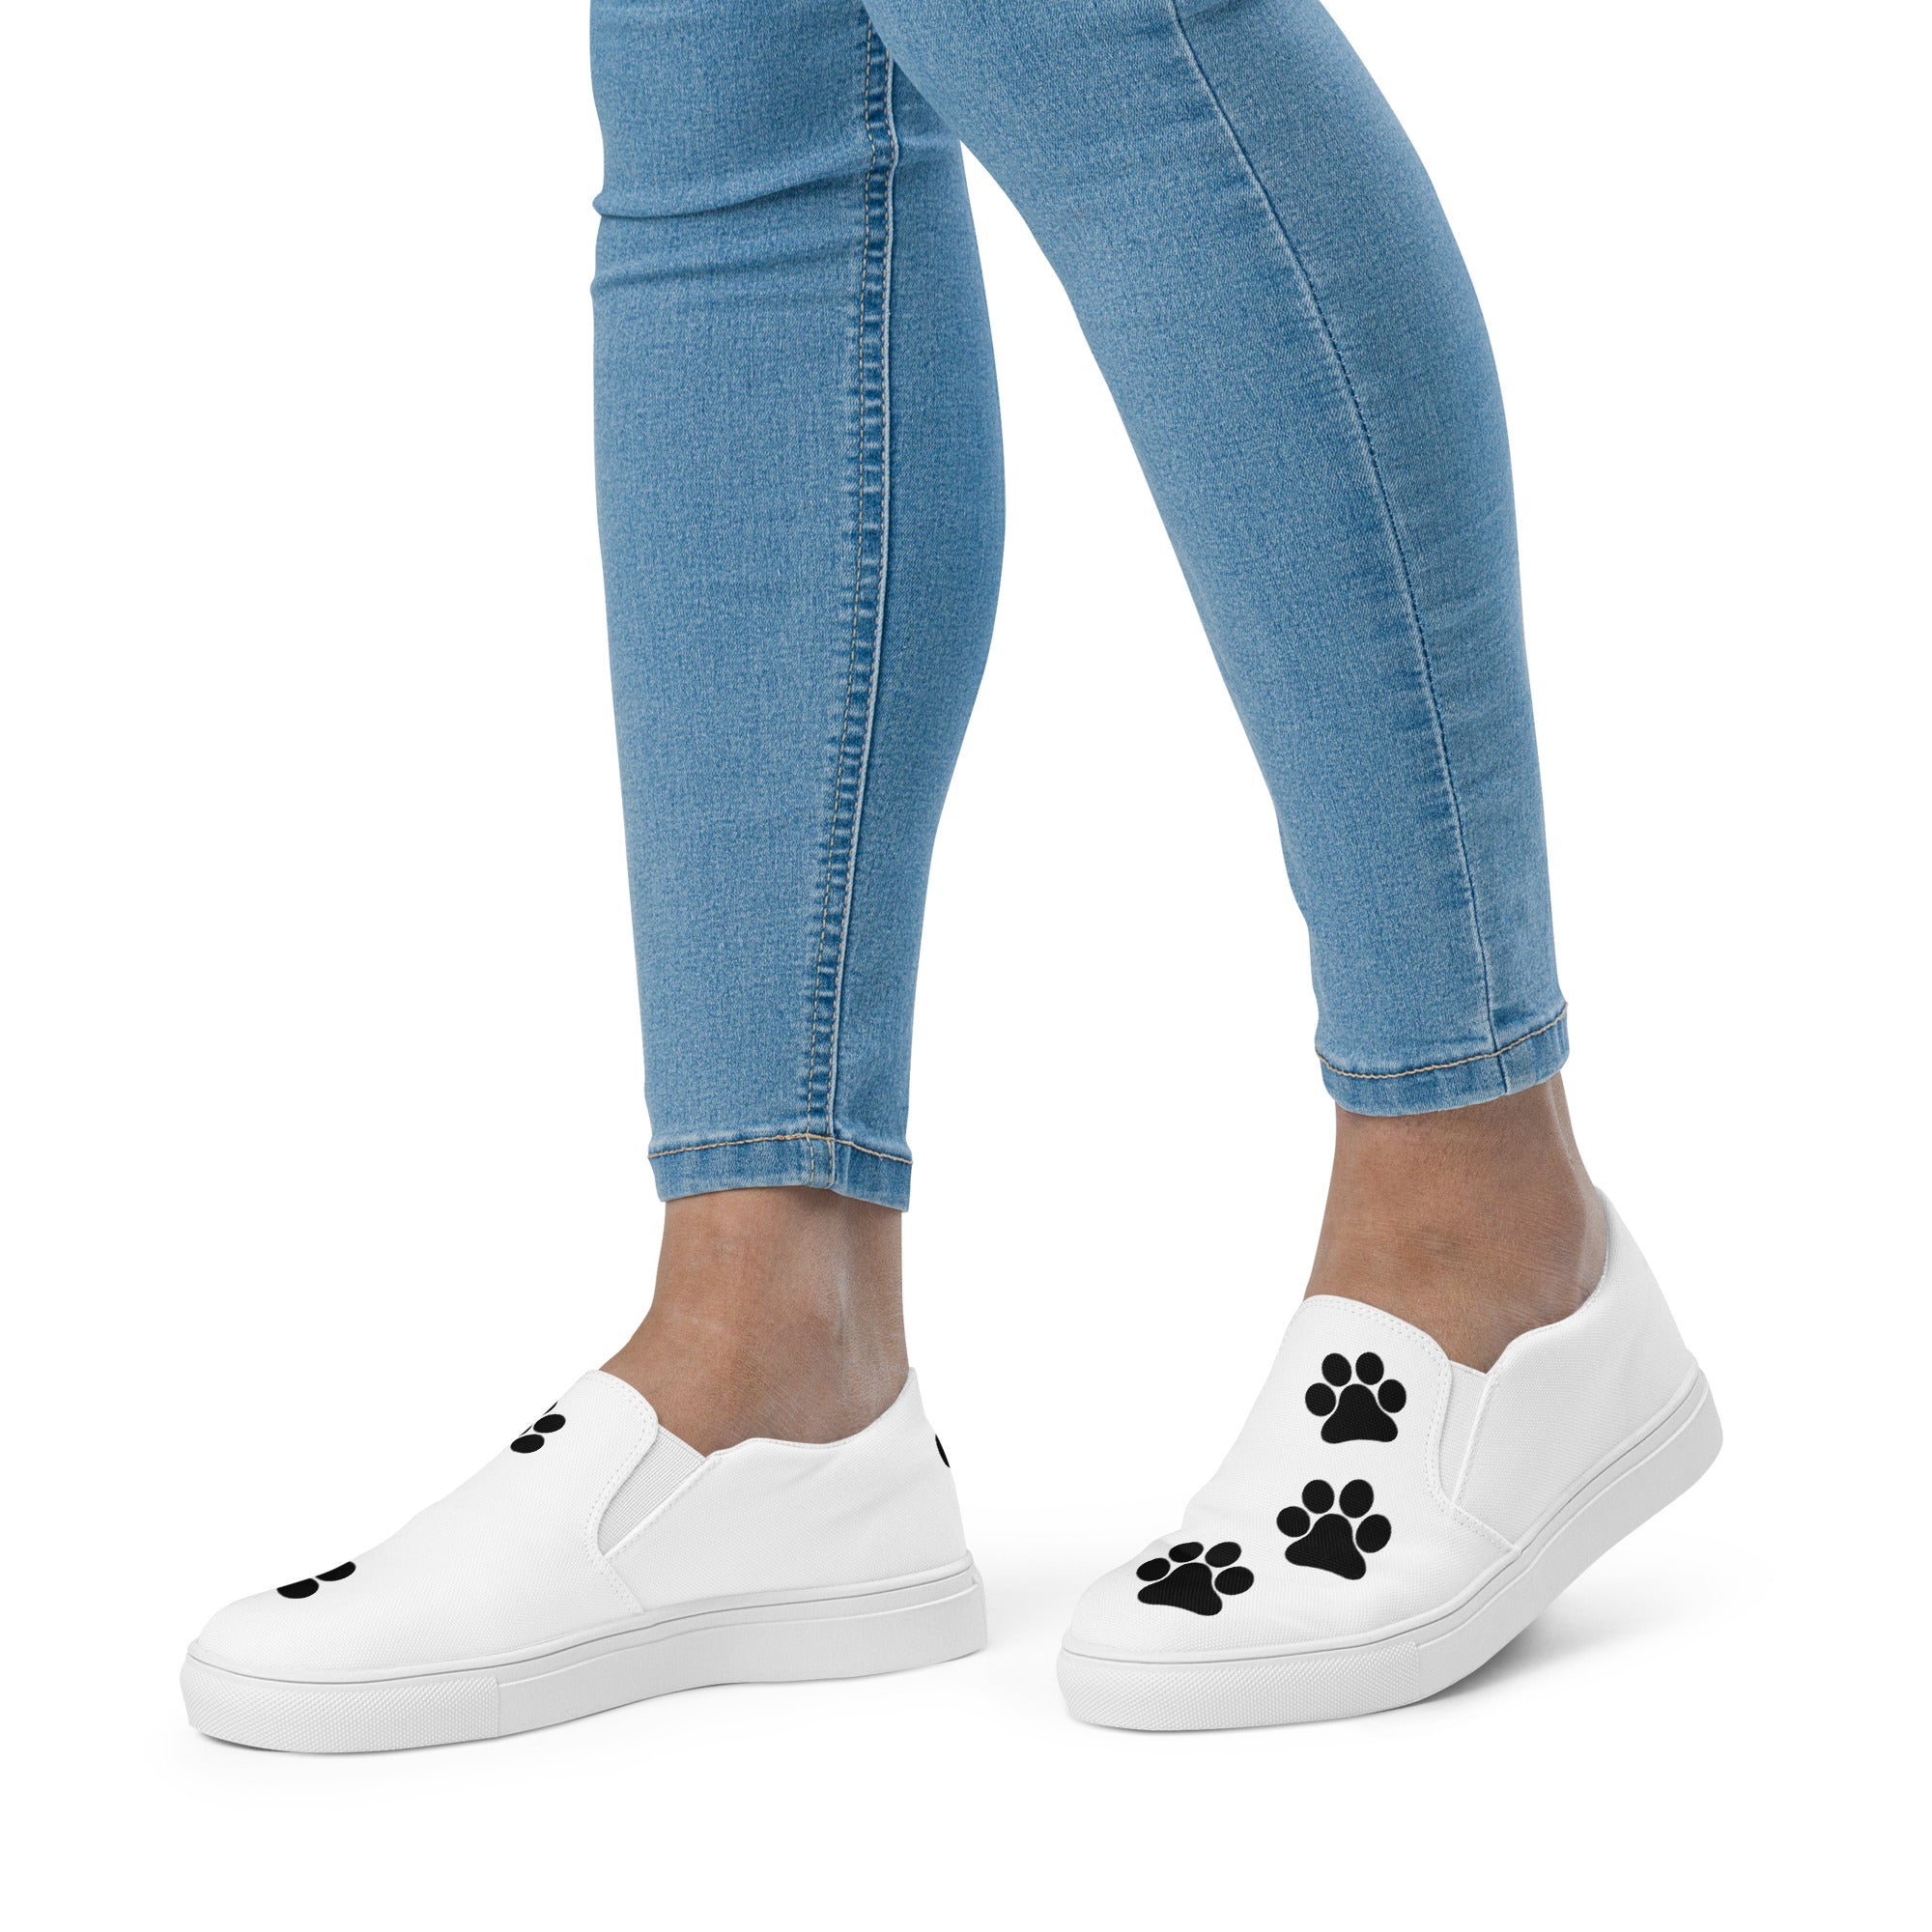 Women’s slip-on Black Paw shoes